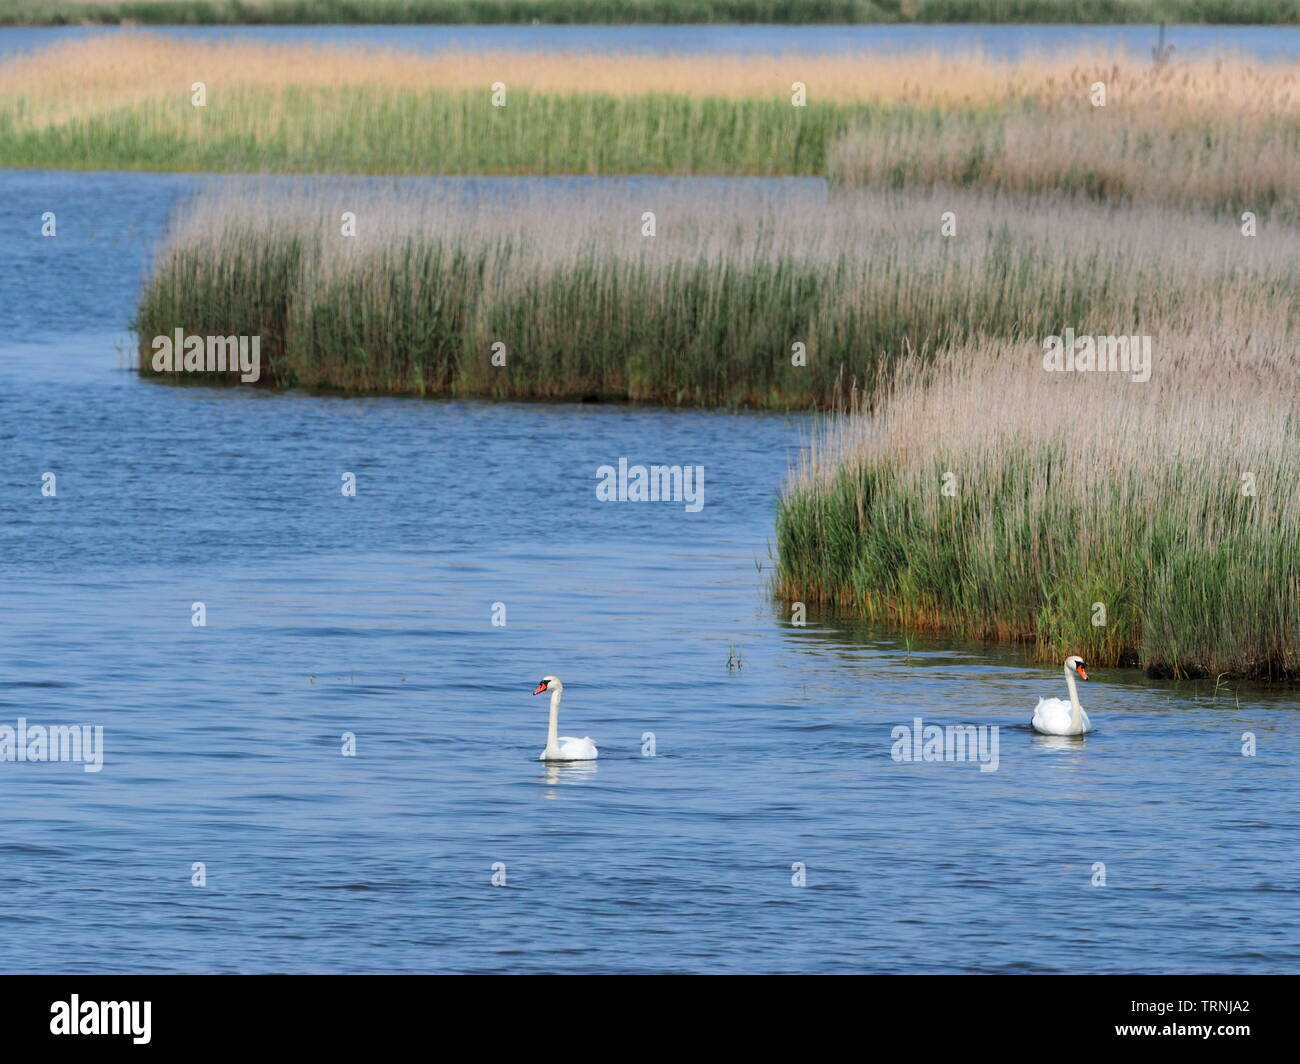 Two swans swimming, Boddenlandschaft, Baltic Sea, Darss, Germany Stock Photo